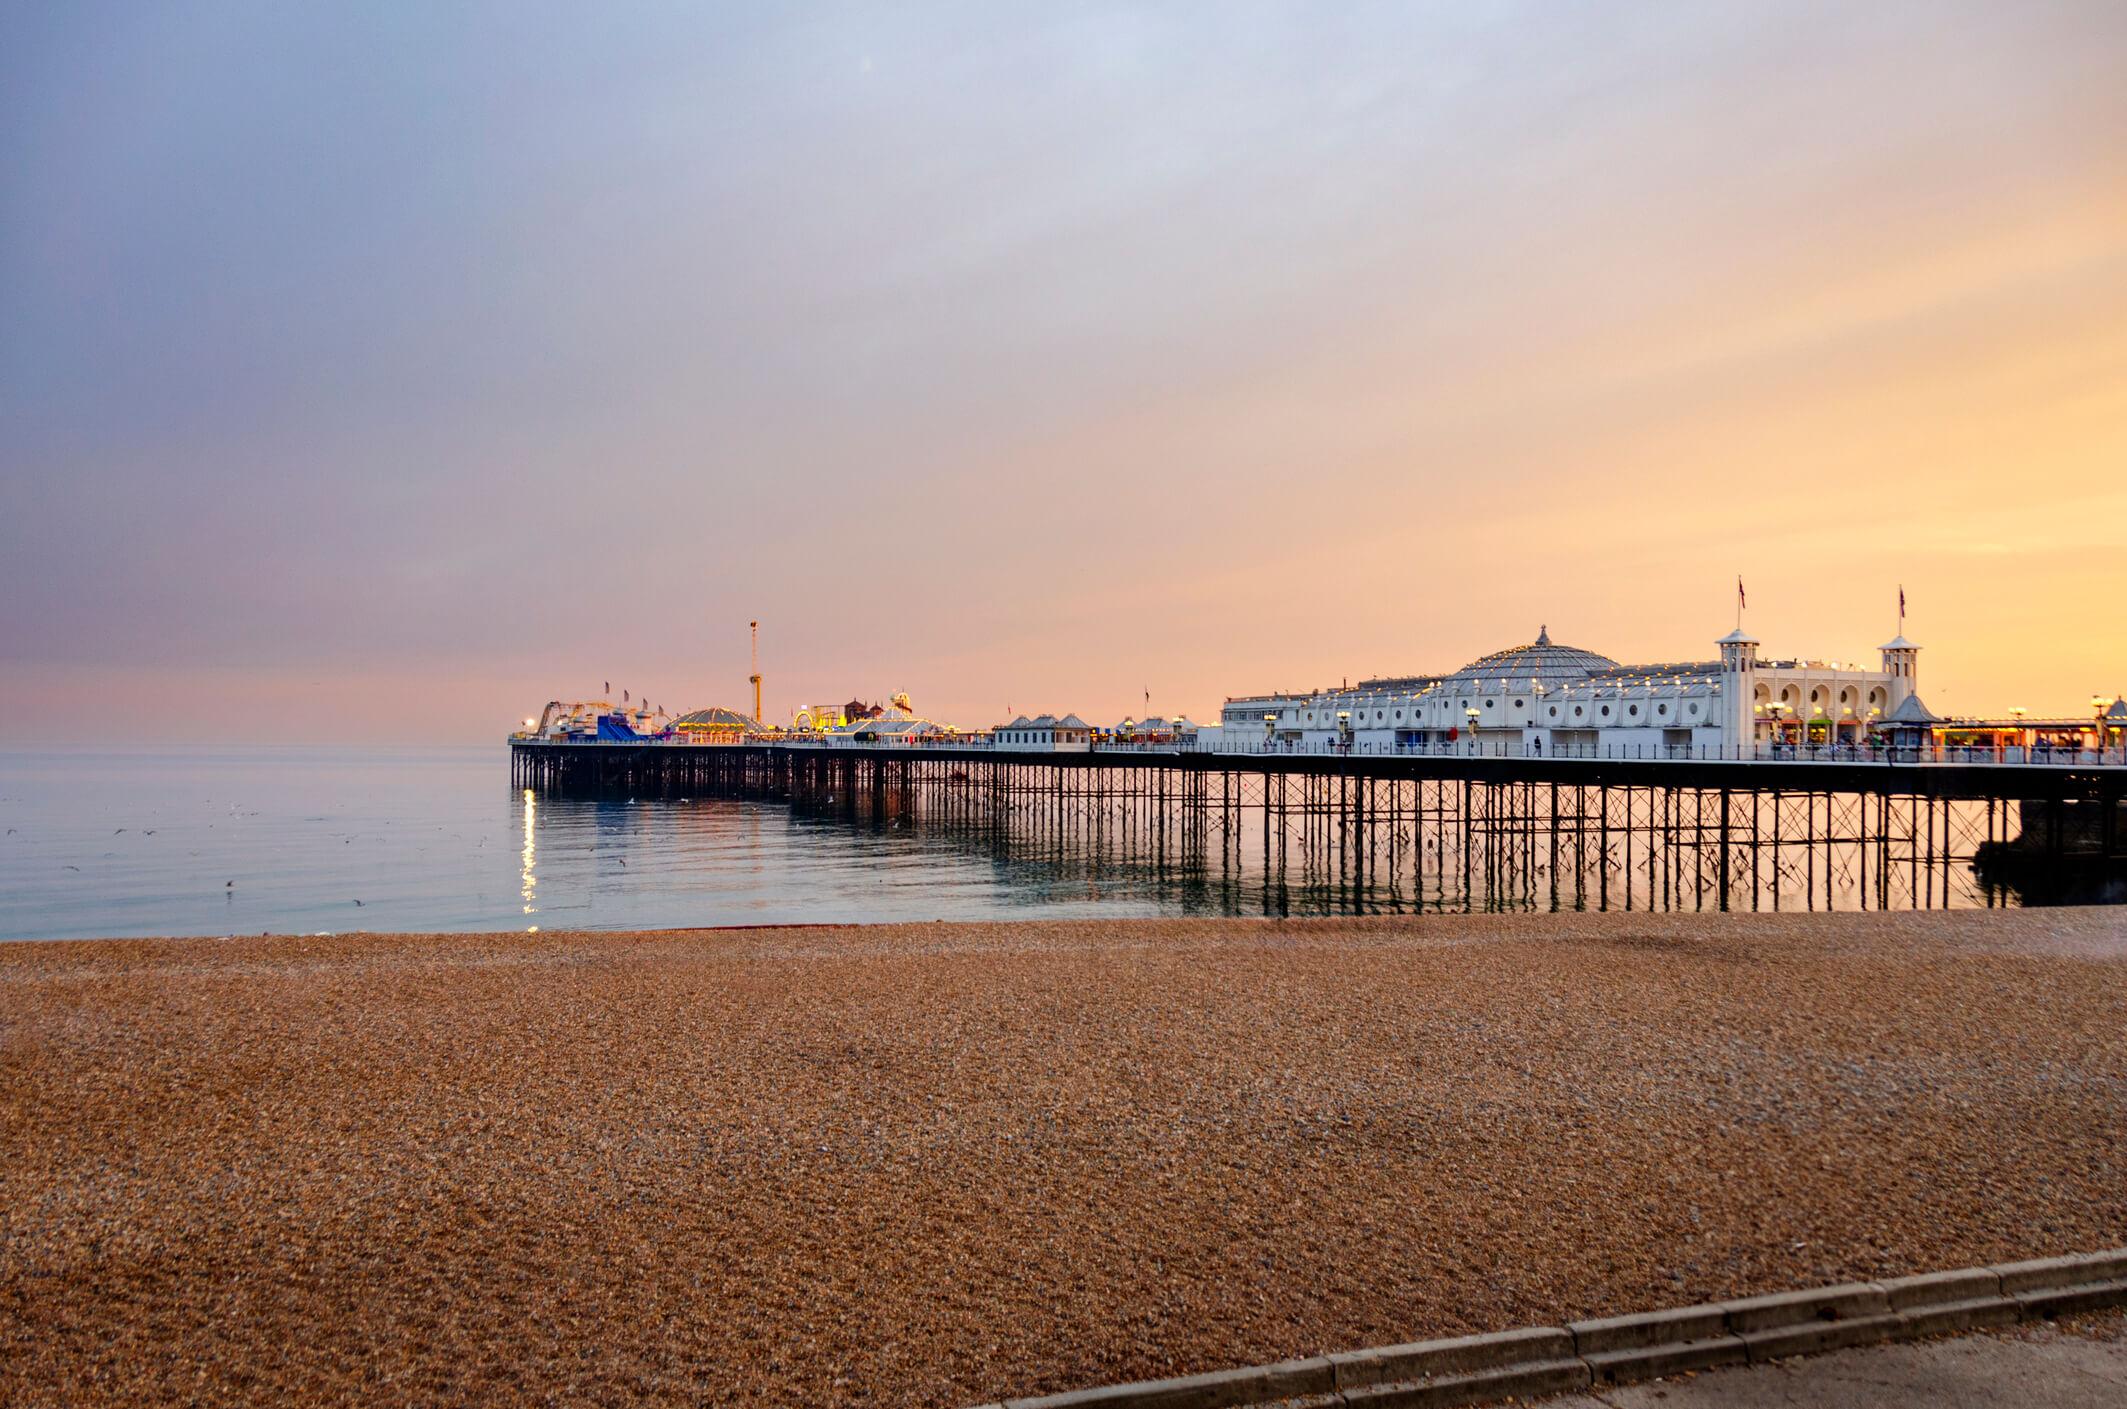 A sunset on Brighton beach